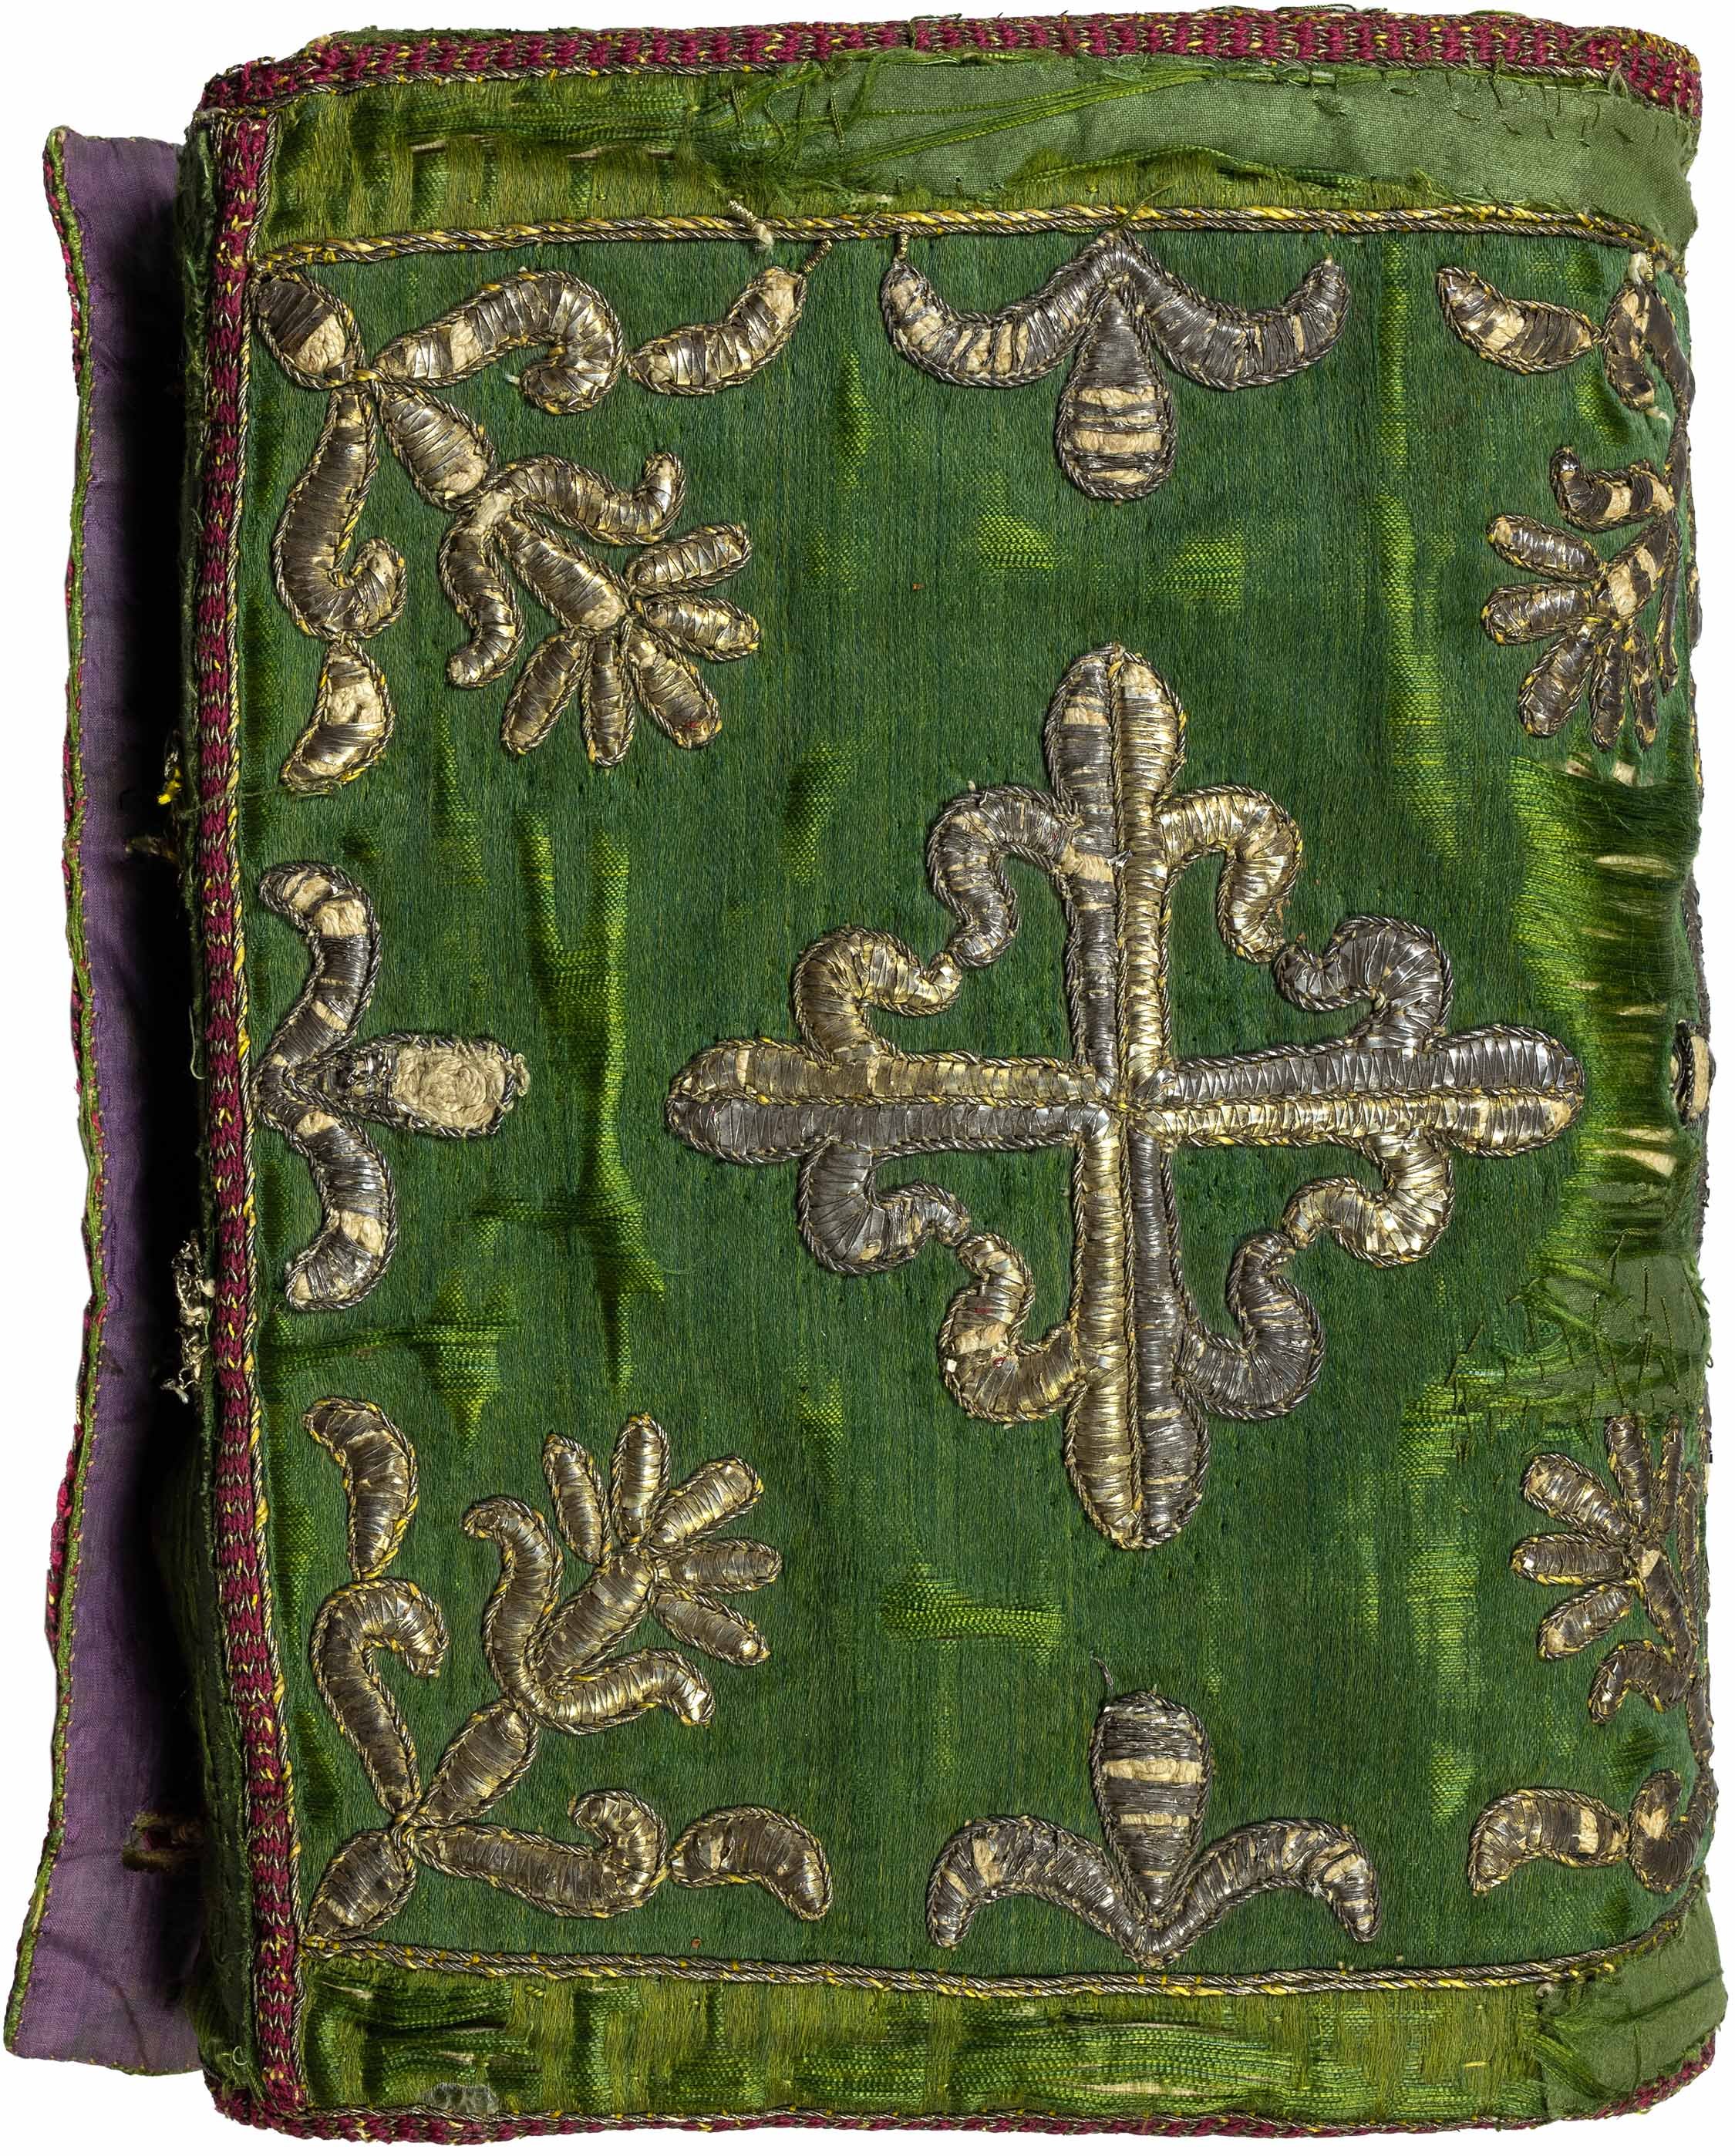 Saint-Carlo-Borromeo-reliquary-bible-plantin-1565-silk-02.jpg